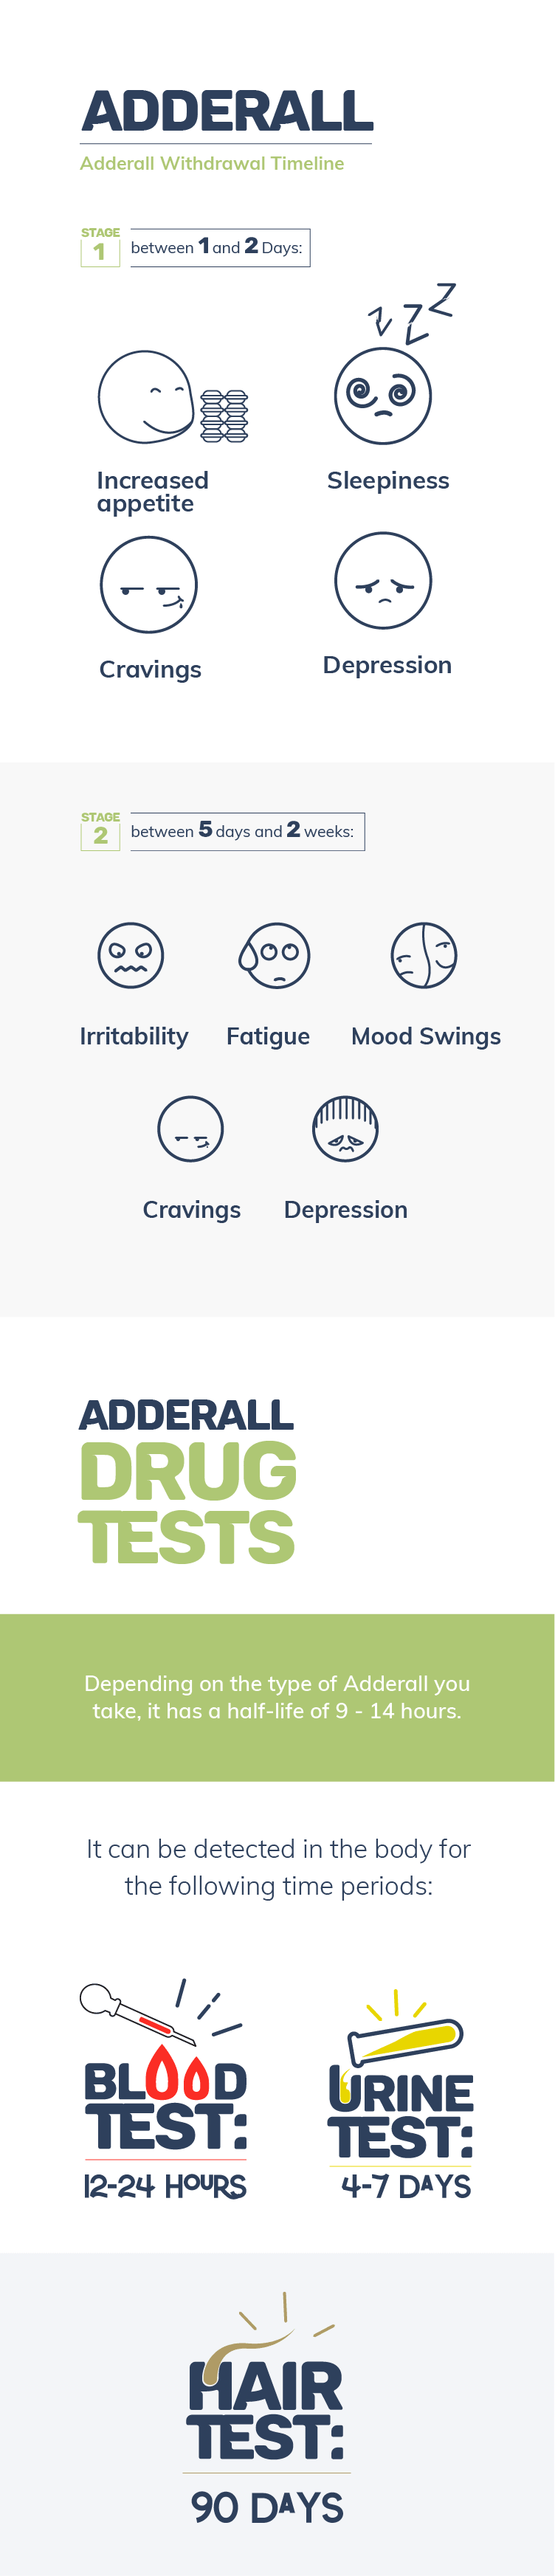 Adderall Drug Tests Mobile